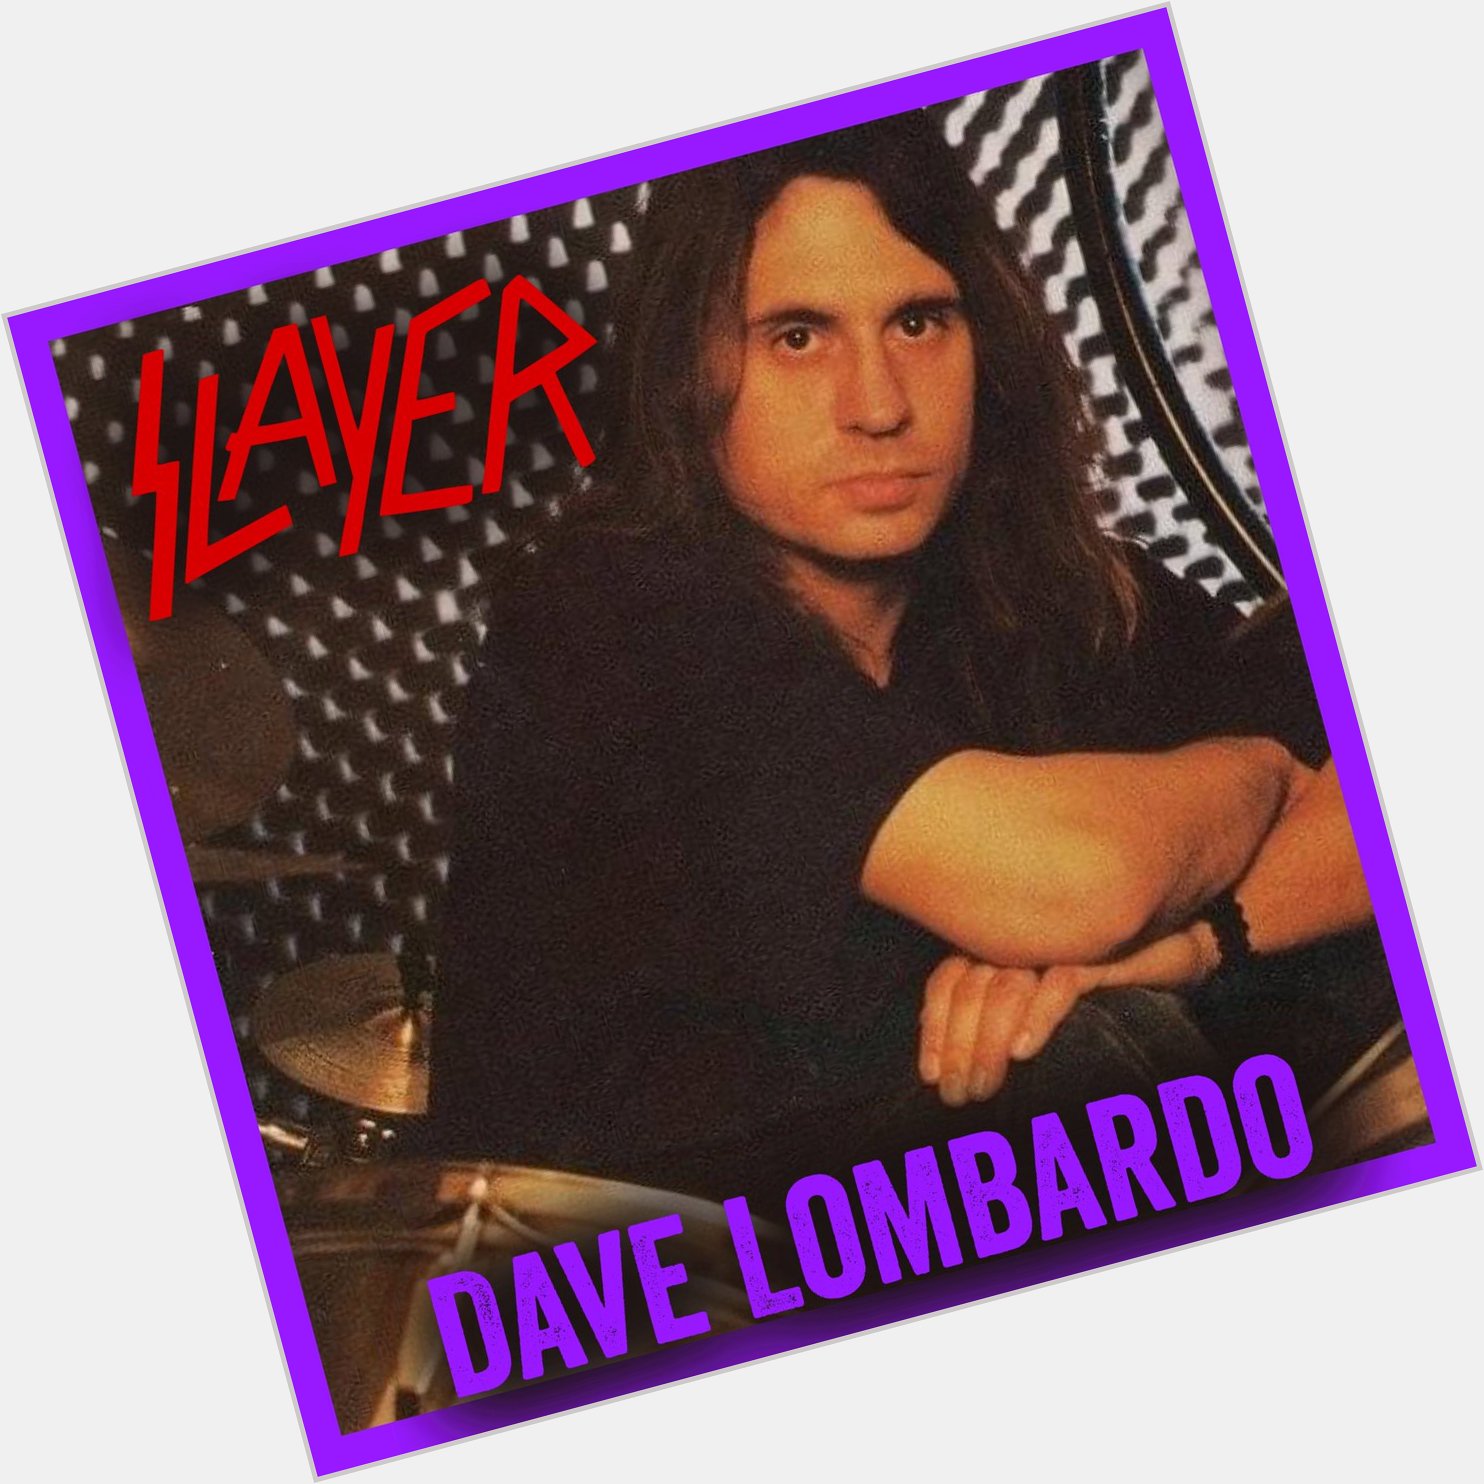 Happy Birthday Dave Lombardo 
Drummer for Slayer 
February 16, 1965 Havana Cuba 